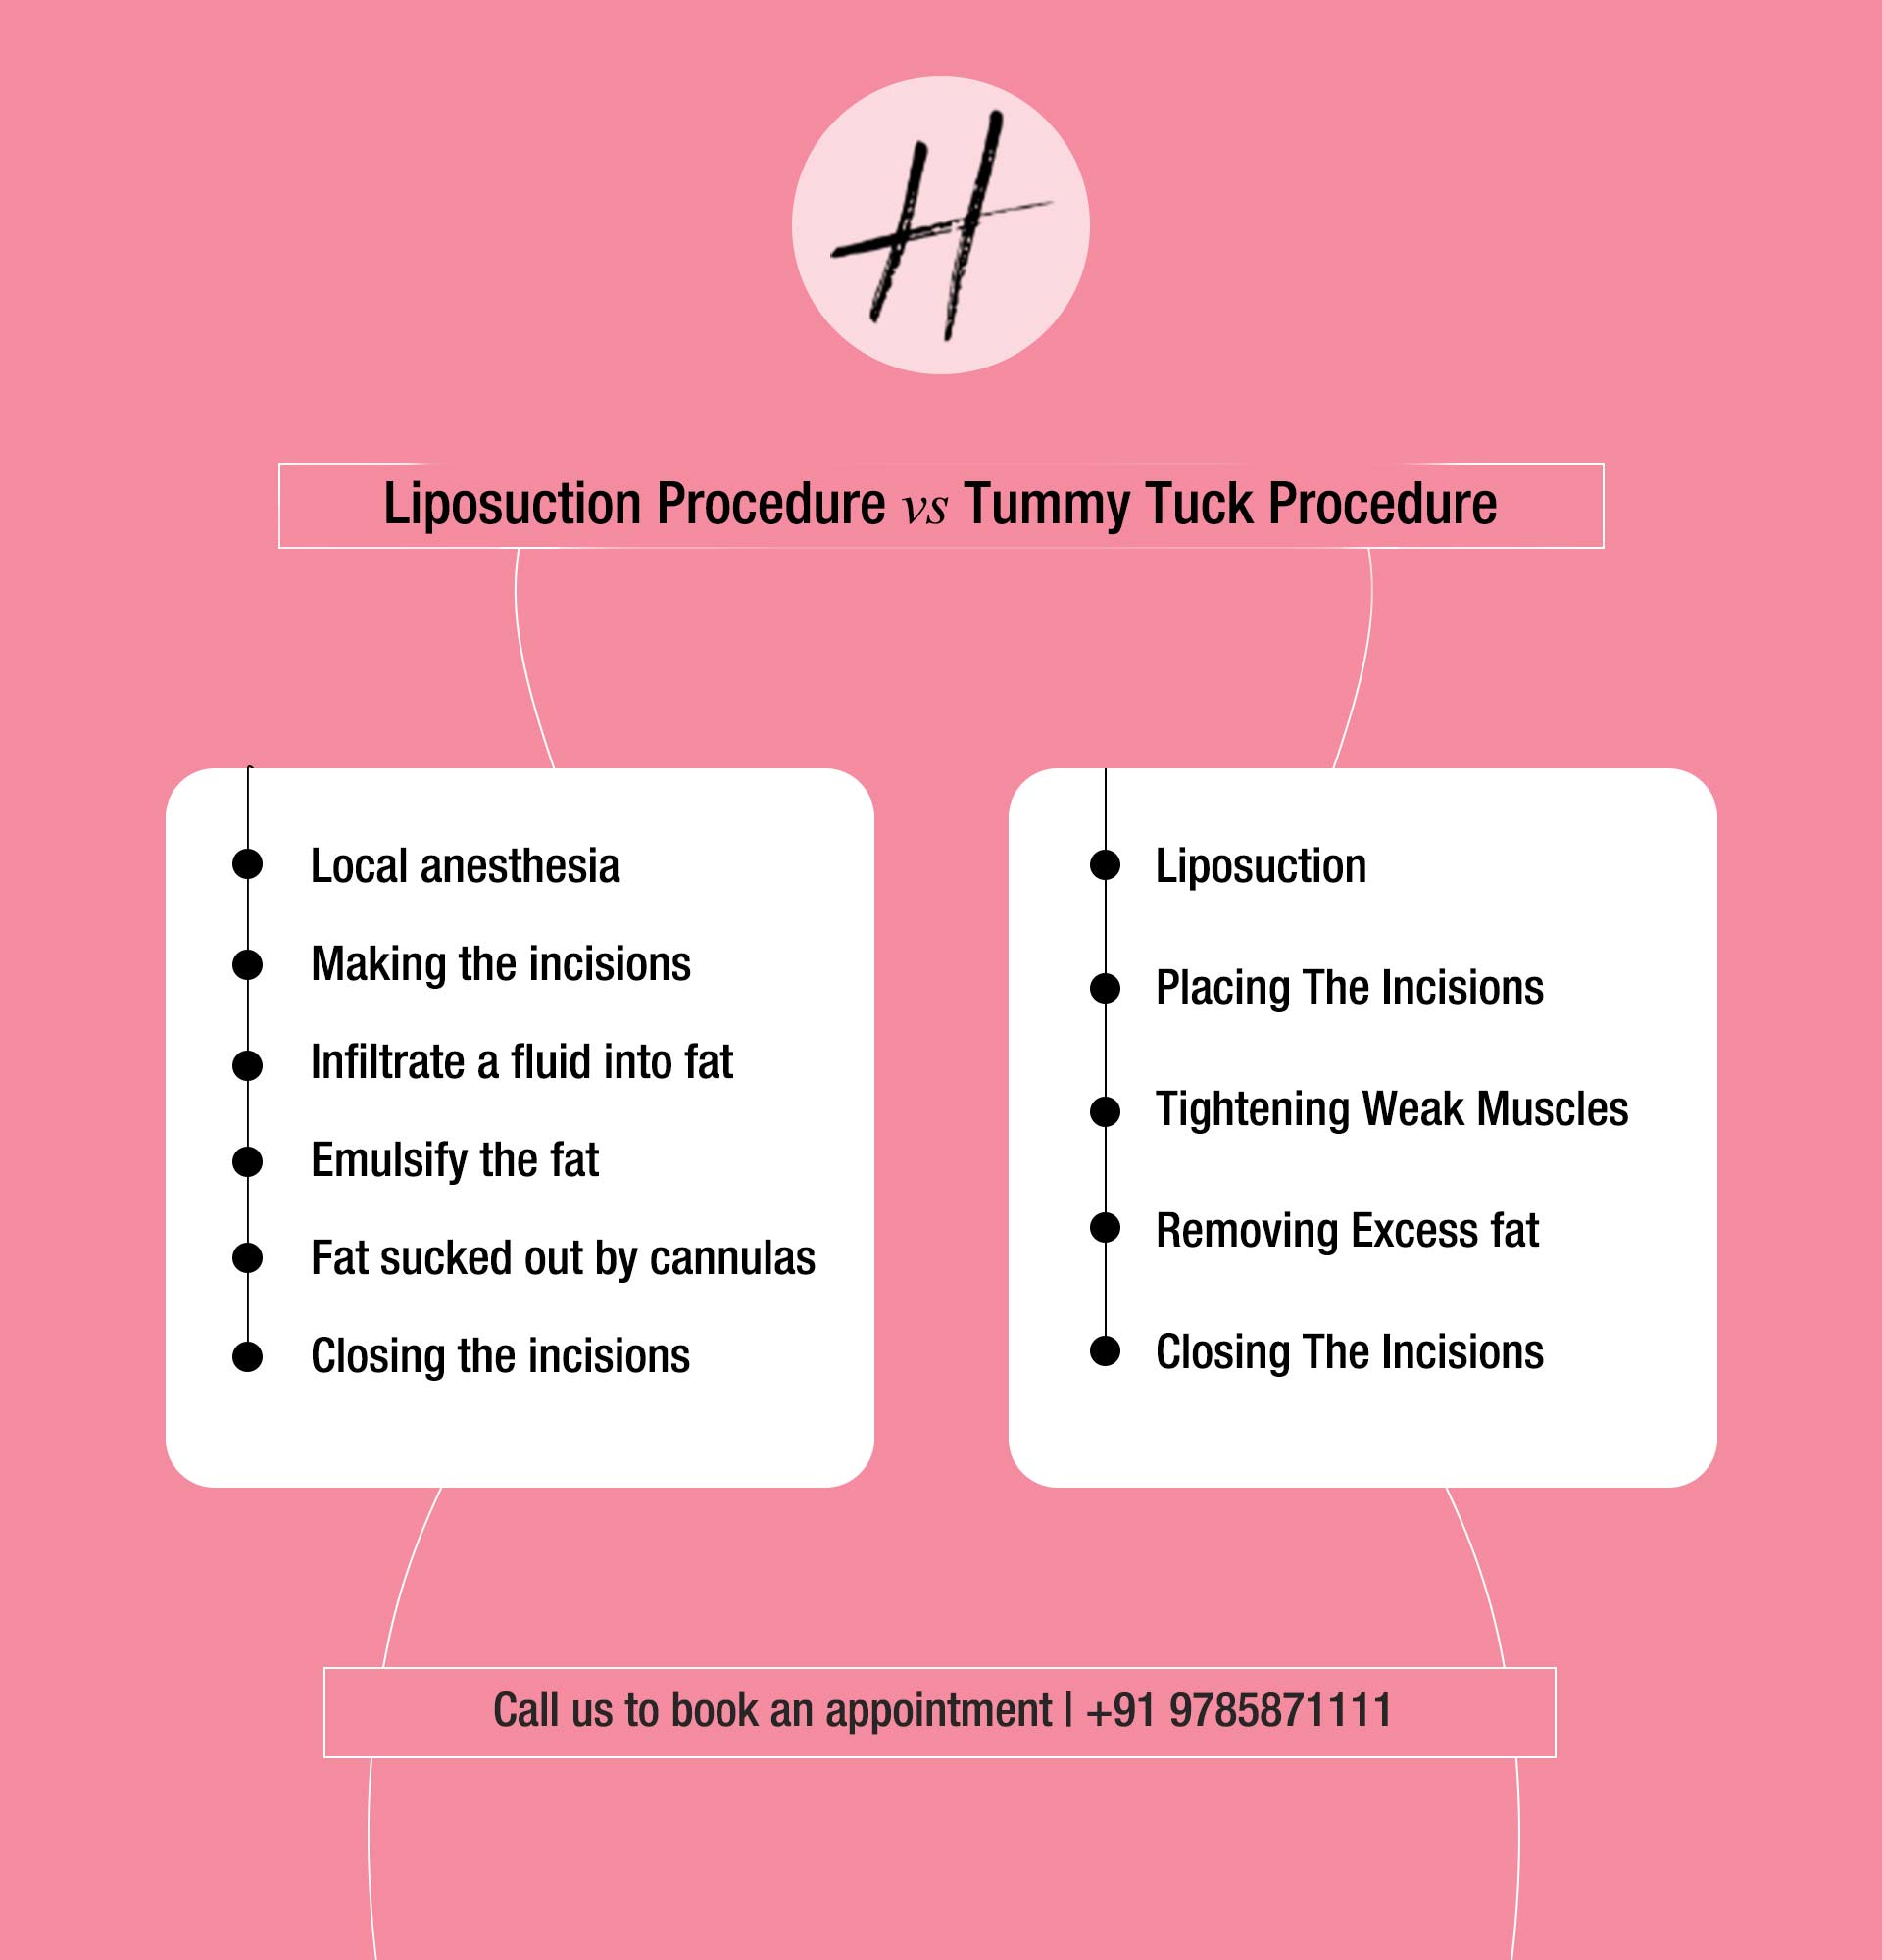  Liposuction vs Tummy Tuck Procedure